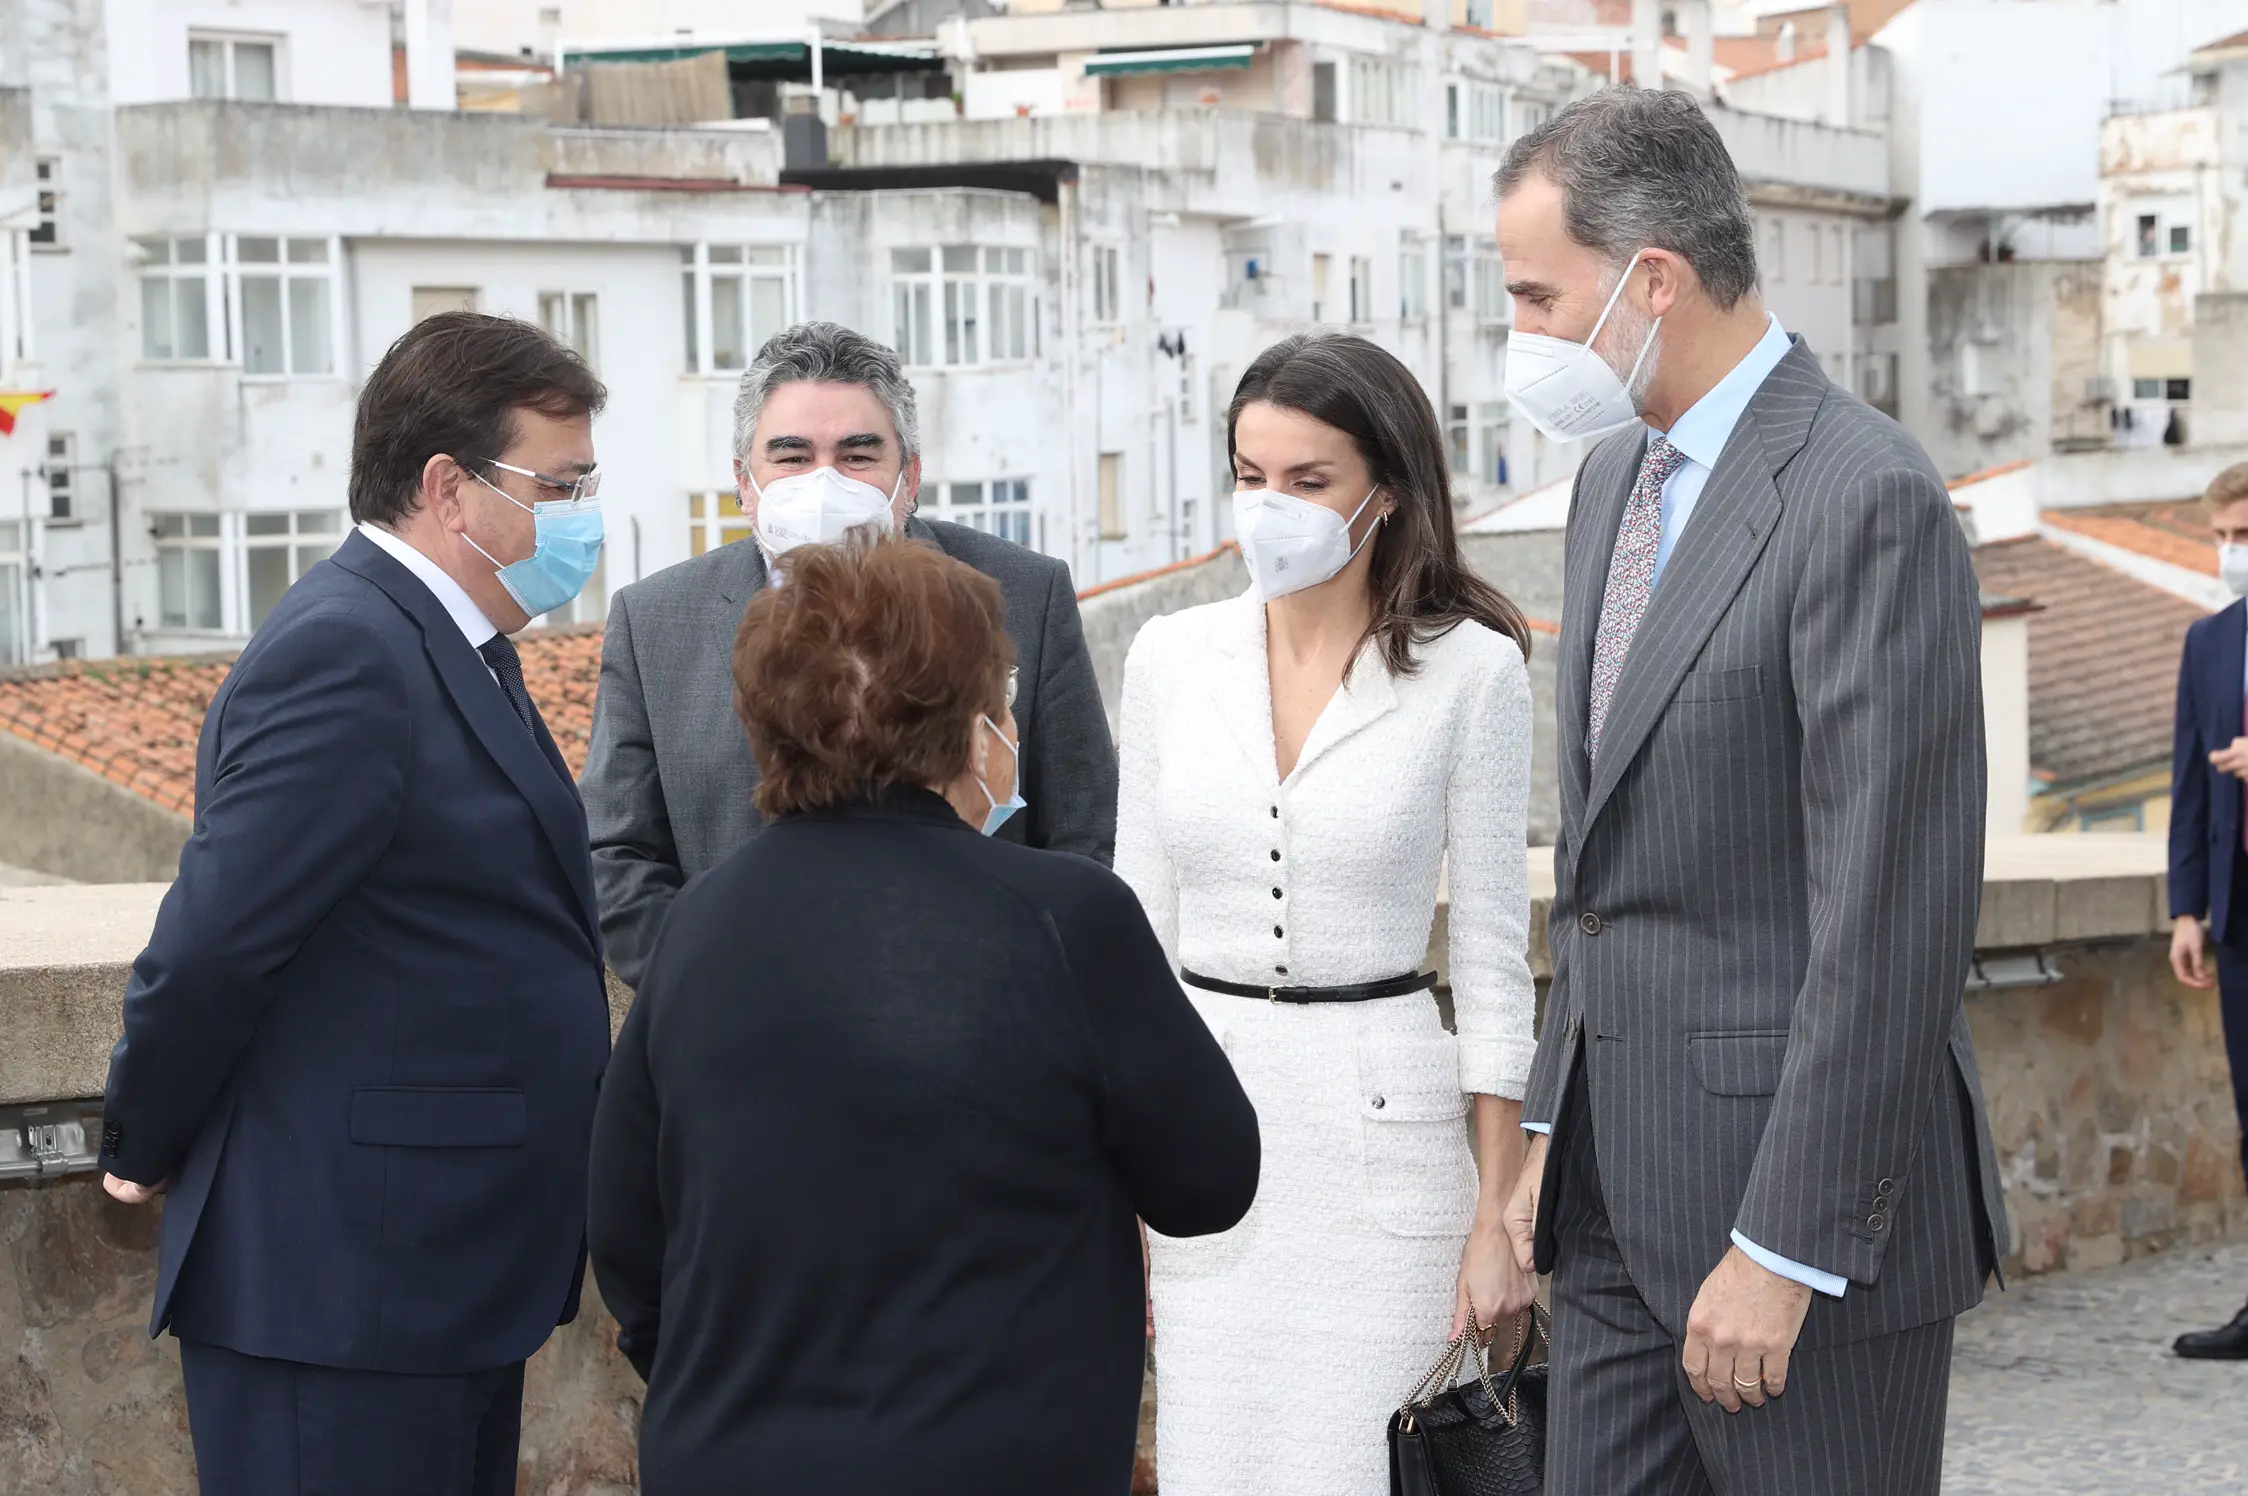 Spanish King Felipe VI and Queen Letizia were visiting Cáceres